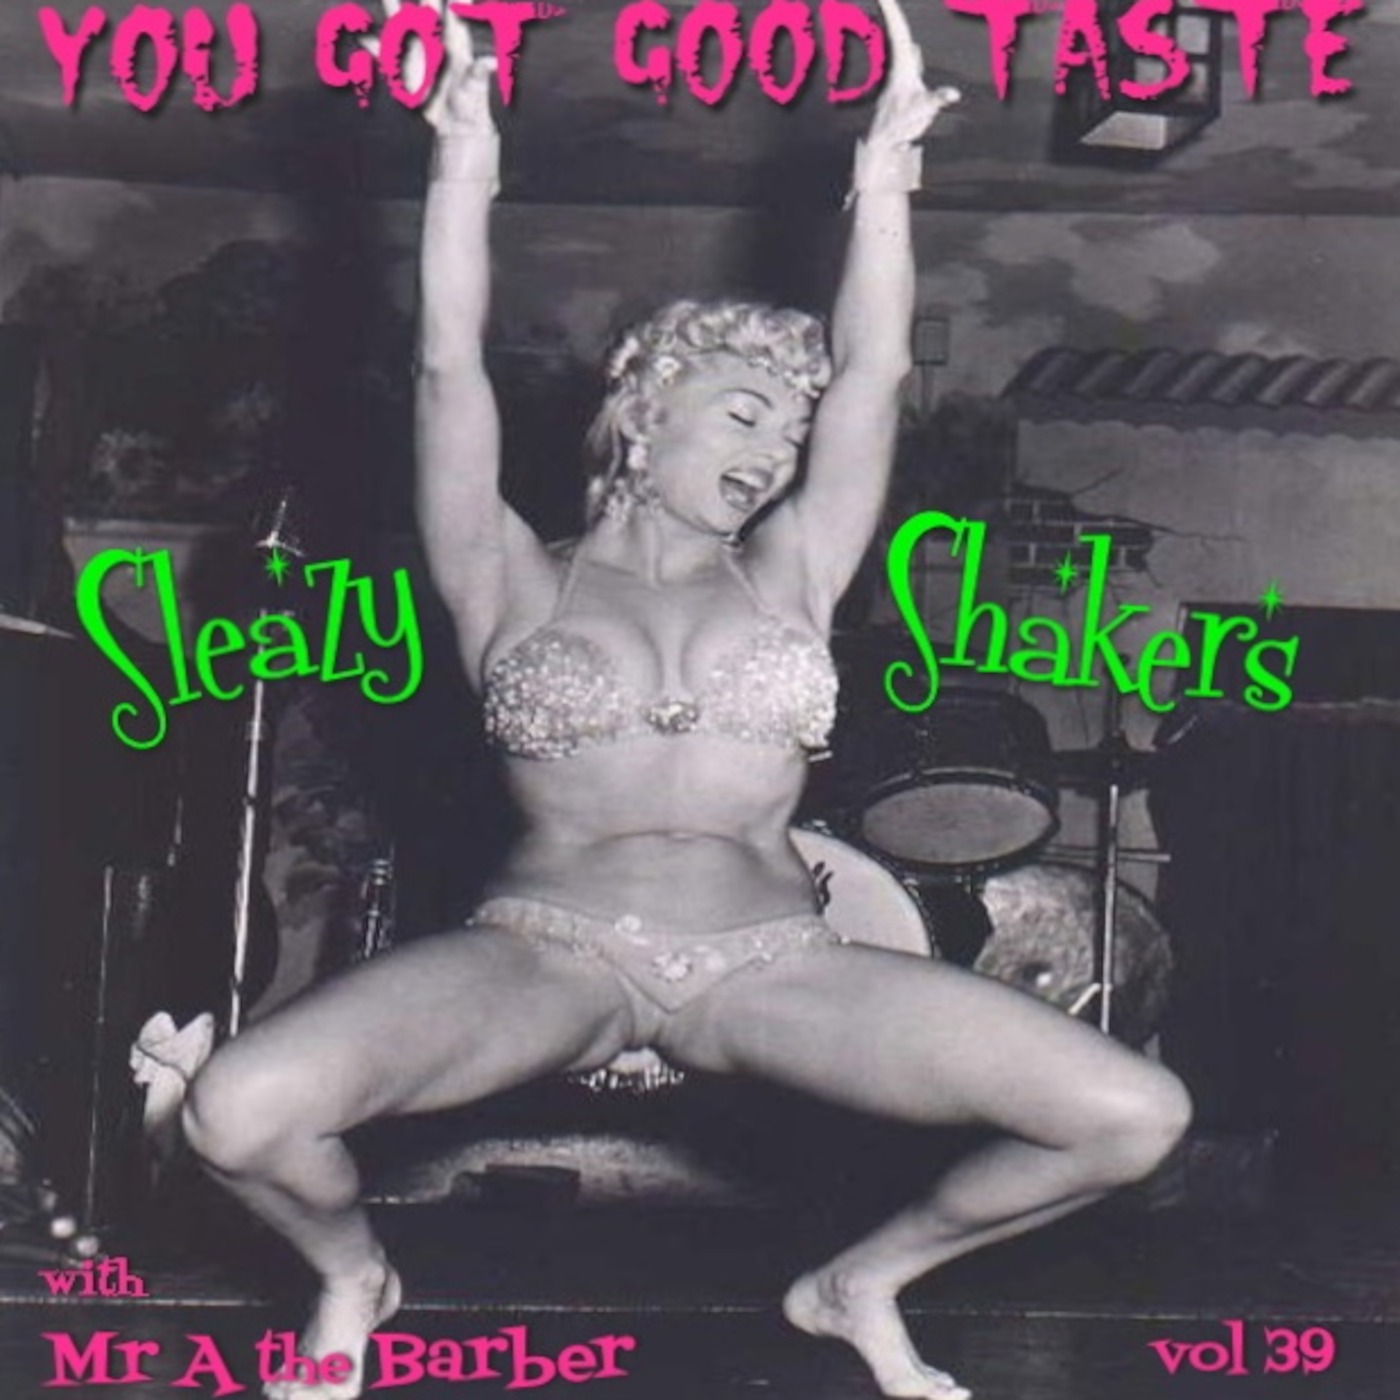 YOU GOT GOOD TASTE vol 39 - Sleazy Shakers